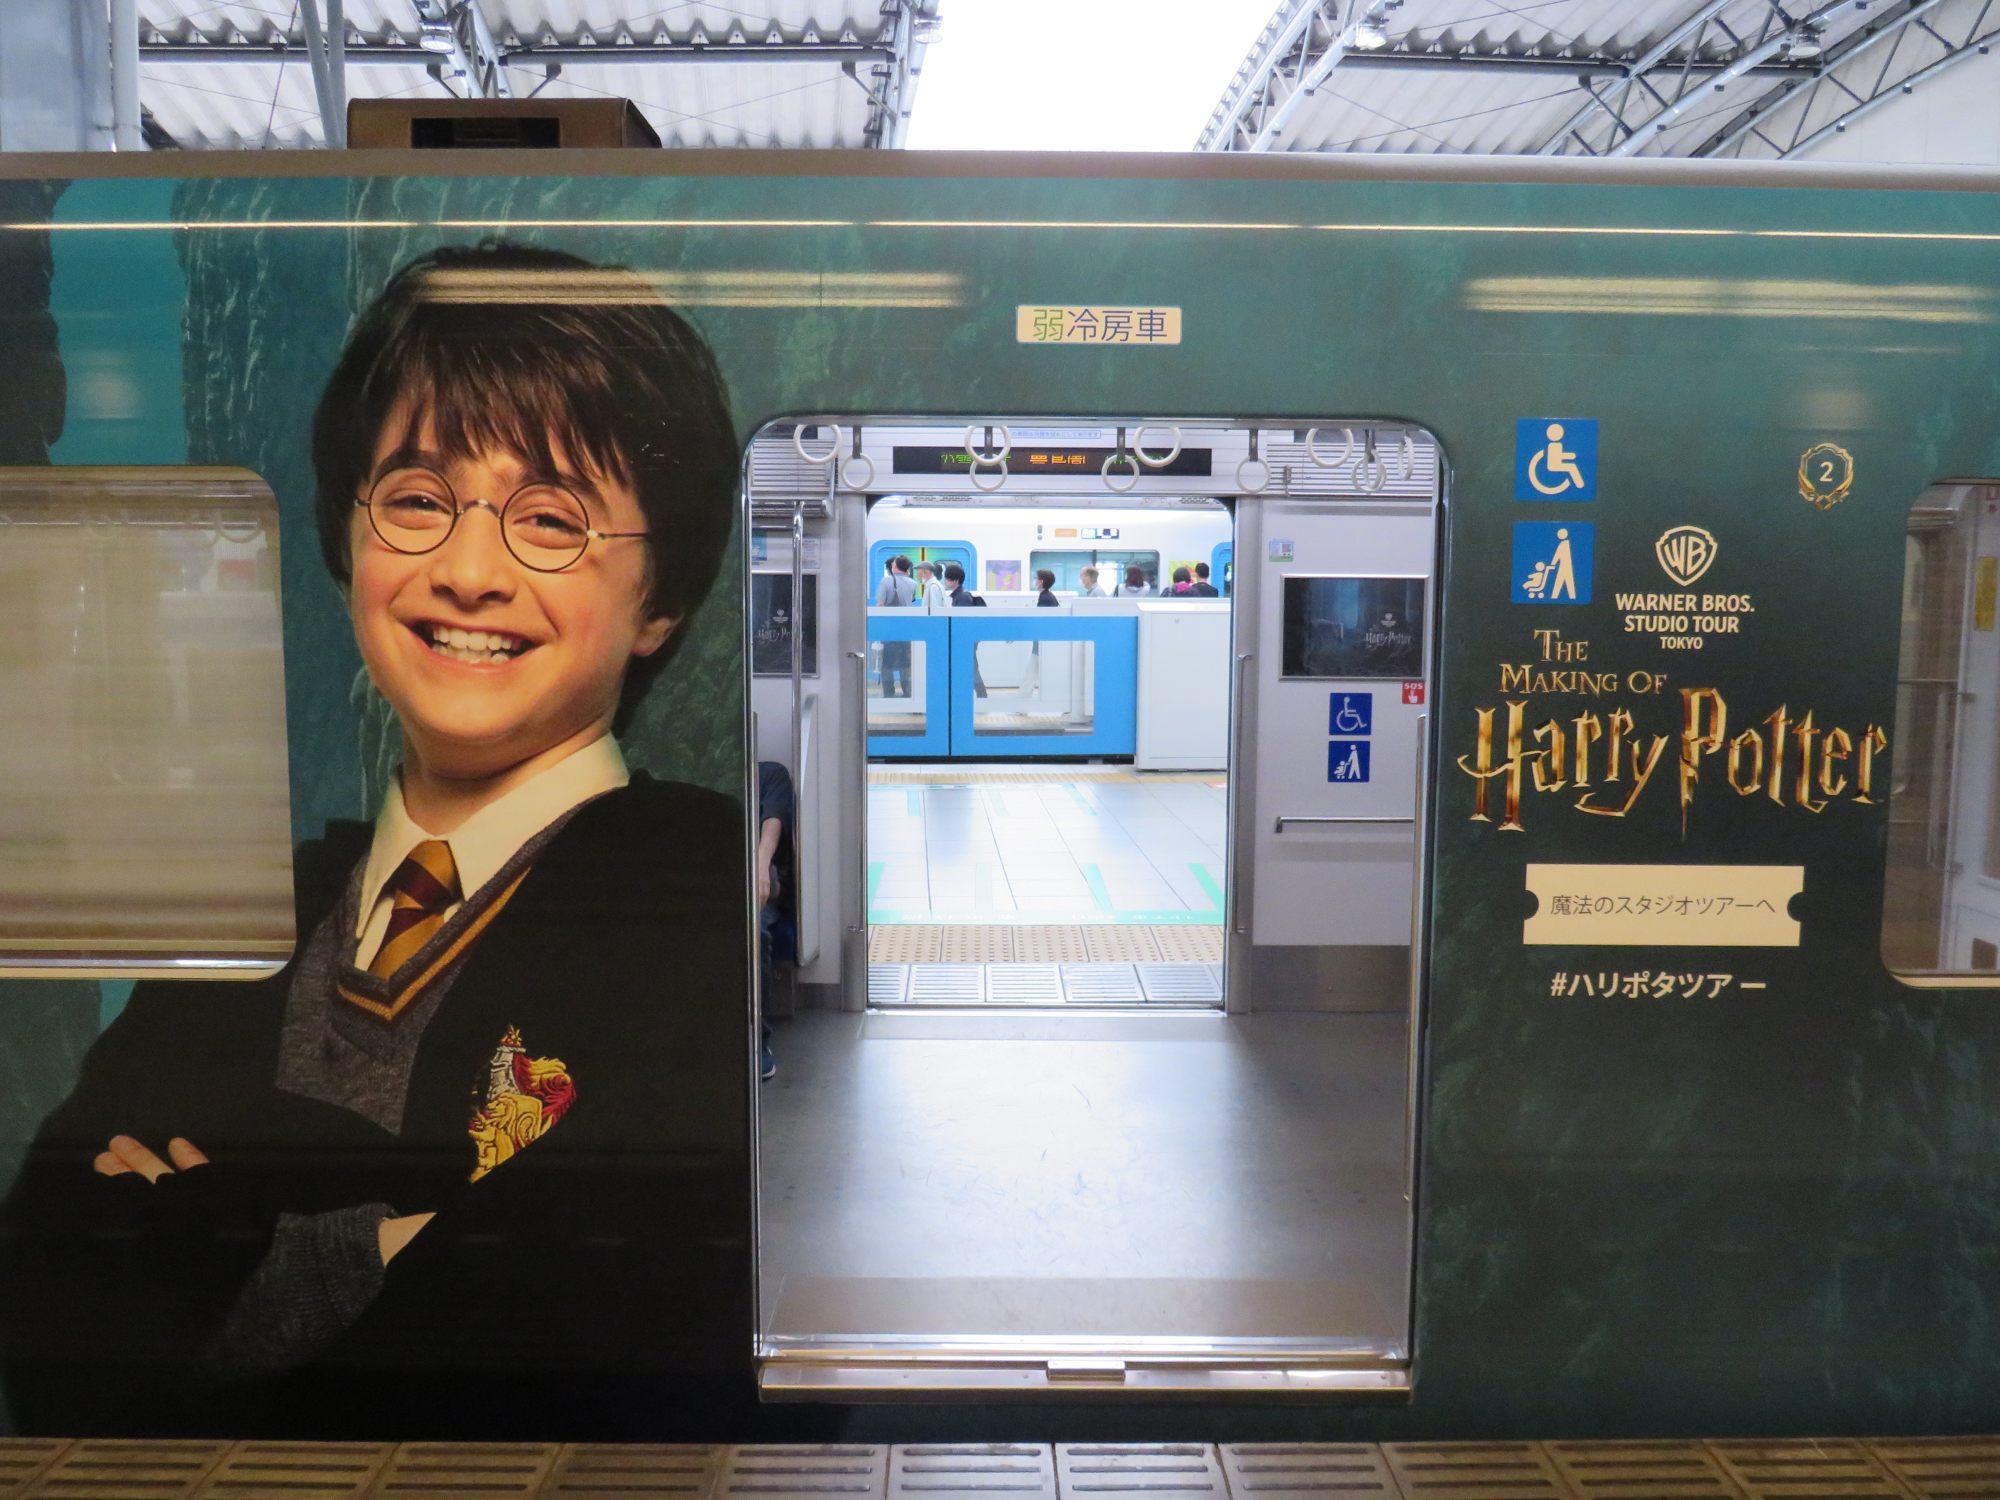 Warner Bros. Studio Tour Tokyo Harry Potter Limited Headband hairband